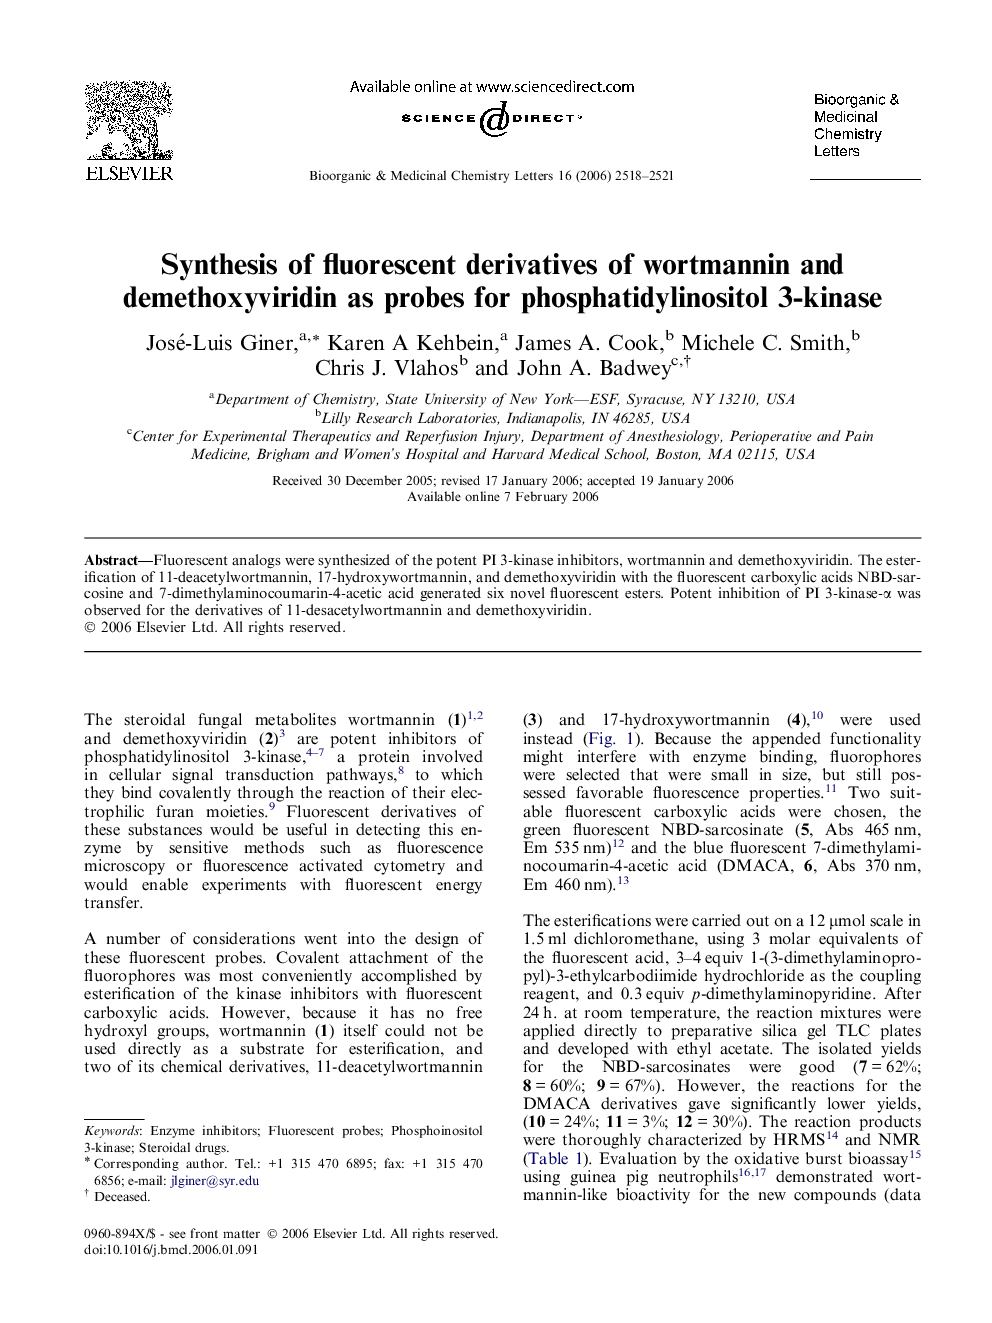 Synthesis of fluorescent derivatives of wortmannin and demethoxyviridin as probes for phosphatidylinositol 3-kinase